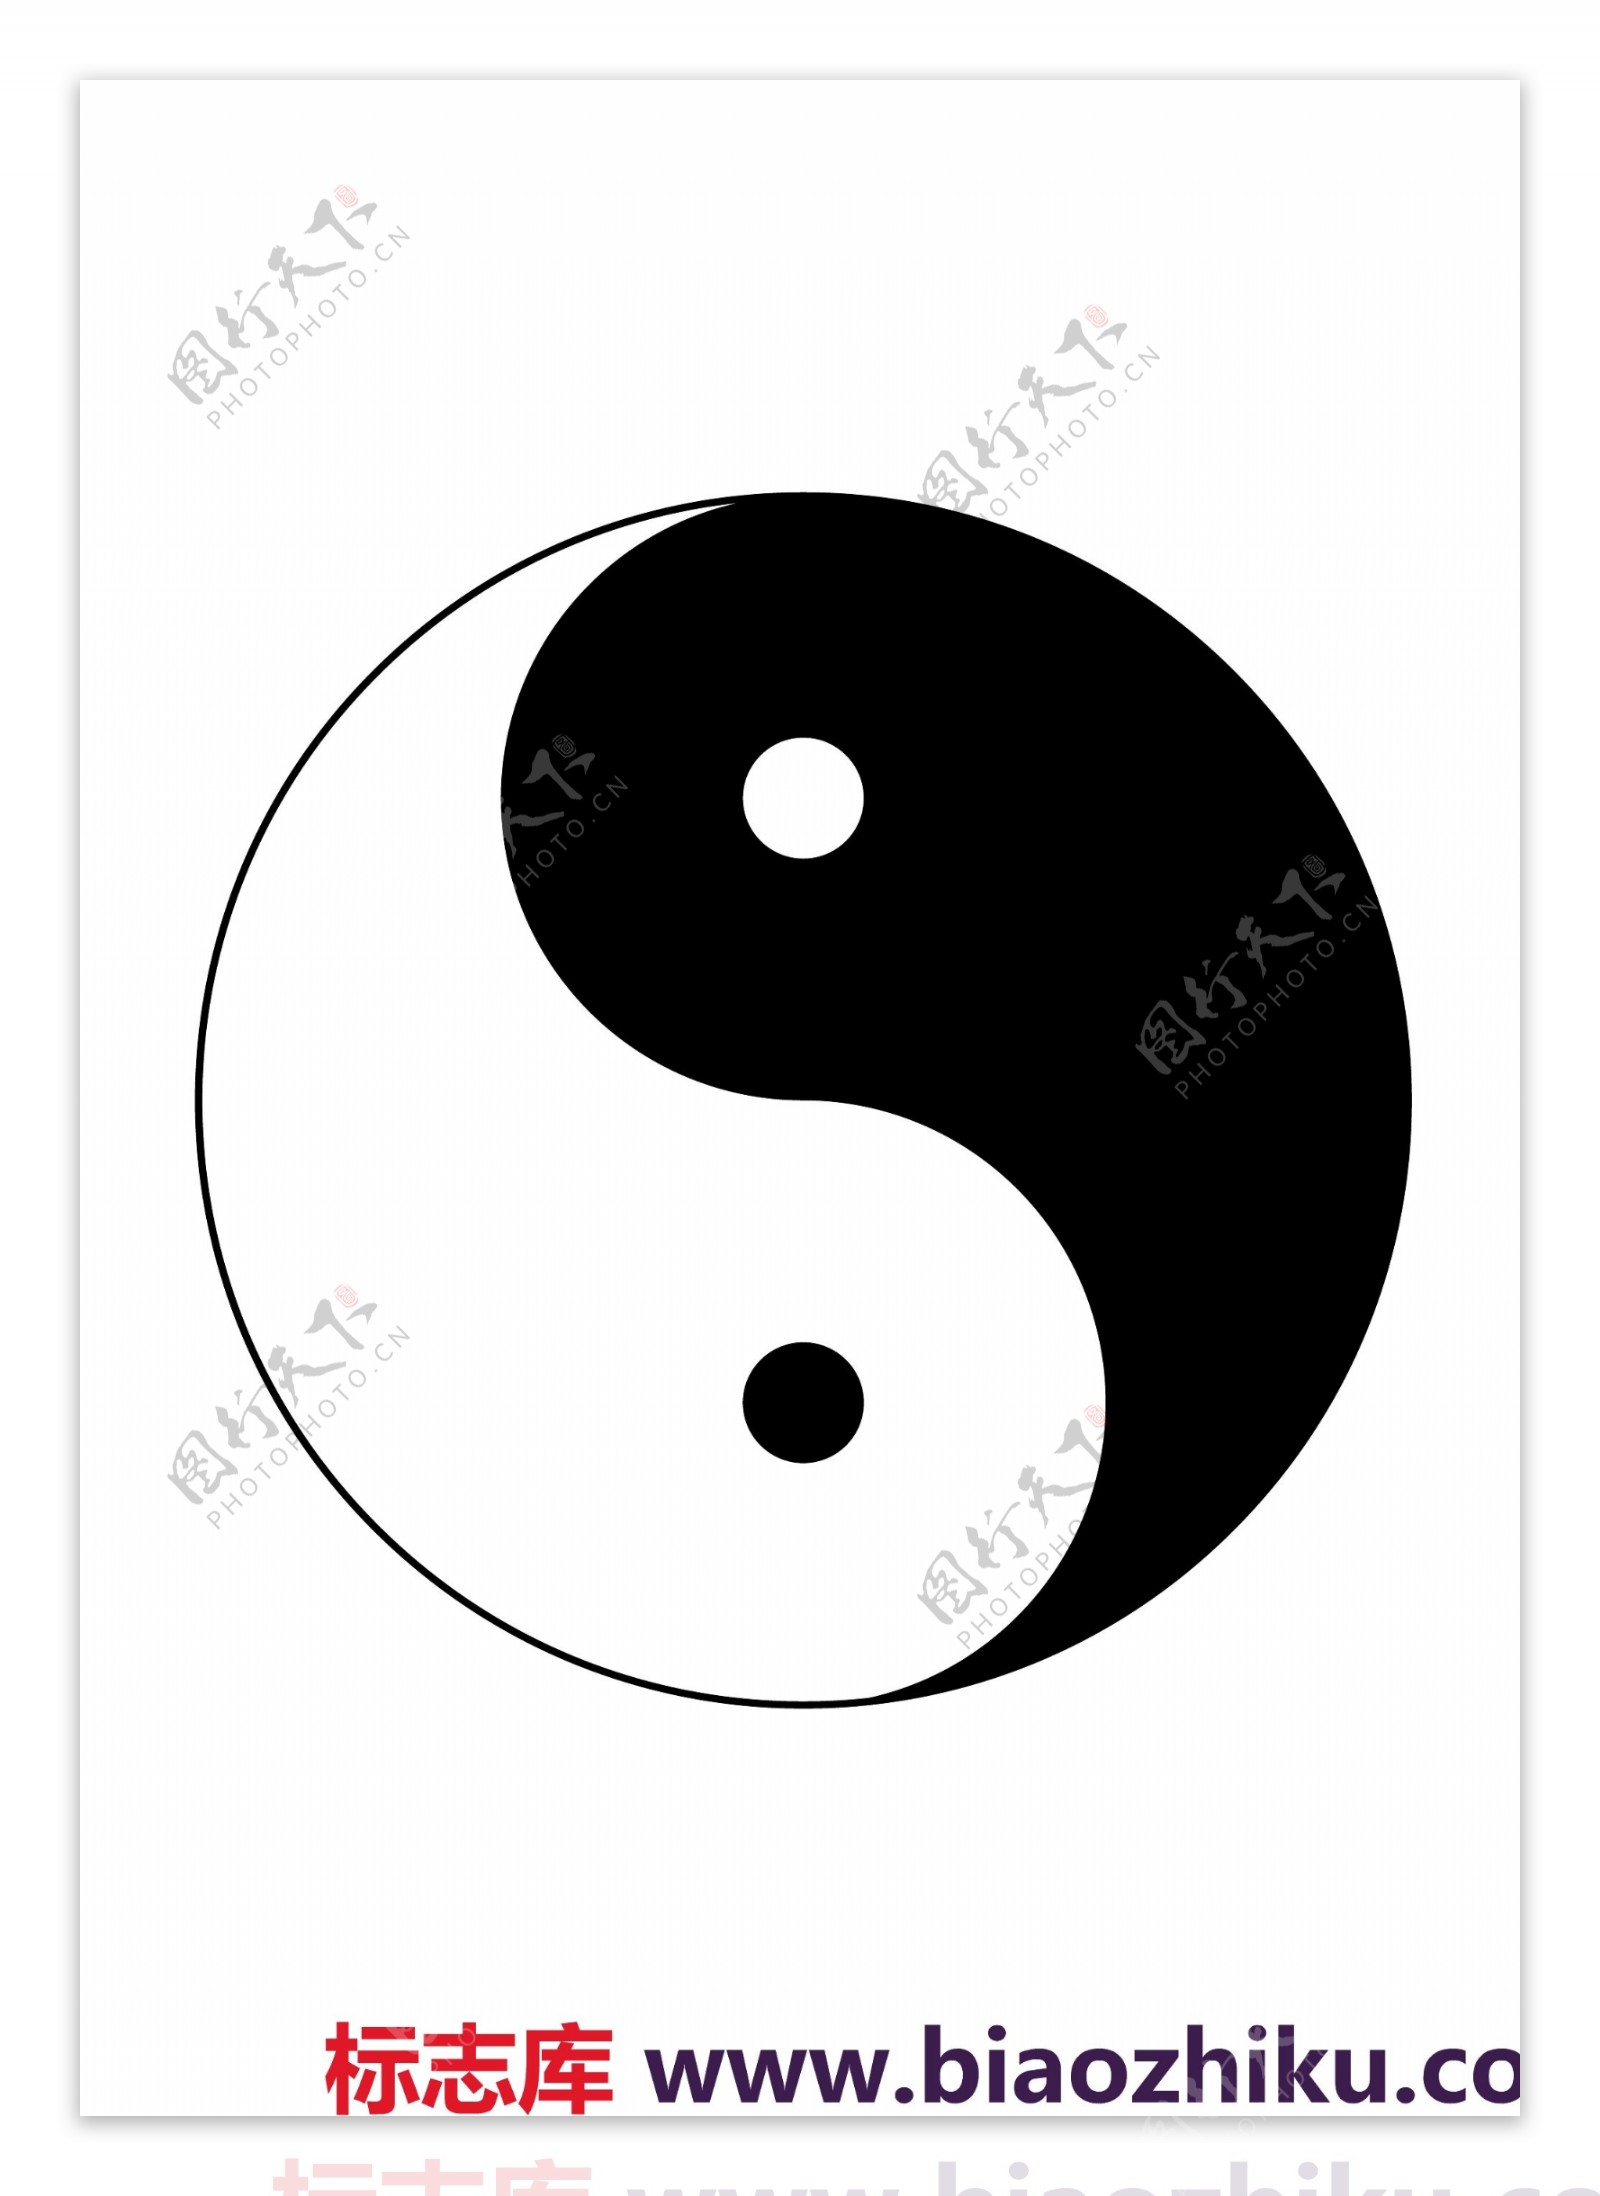 yinandyanglogo设计欣赏yinandyang保健组织LOGO下载标志设计欣赏